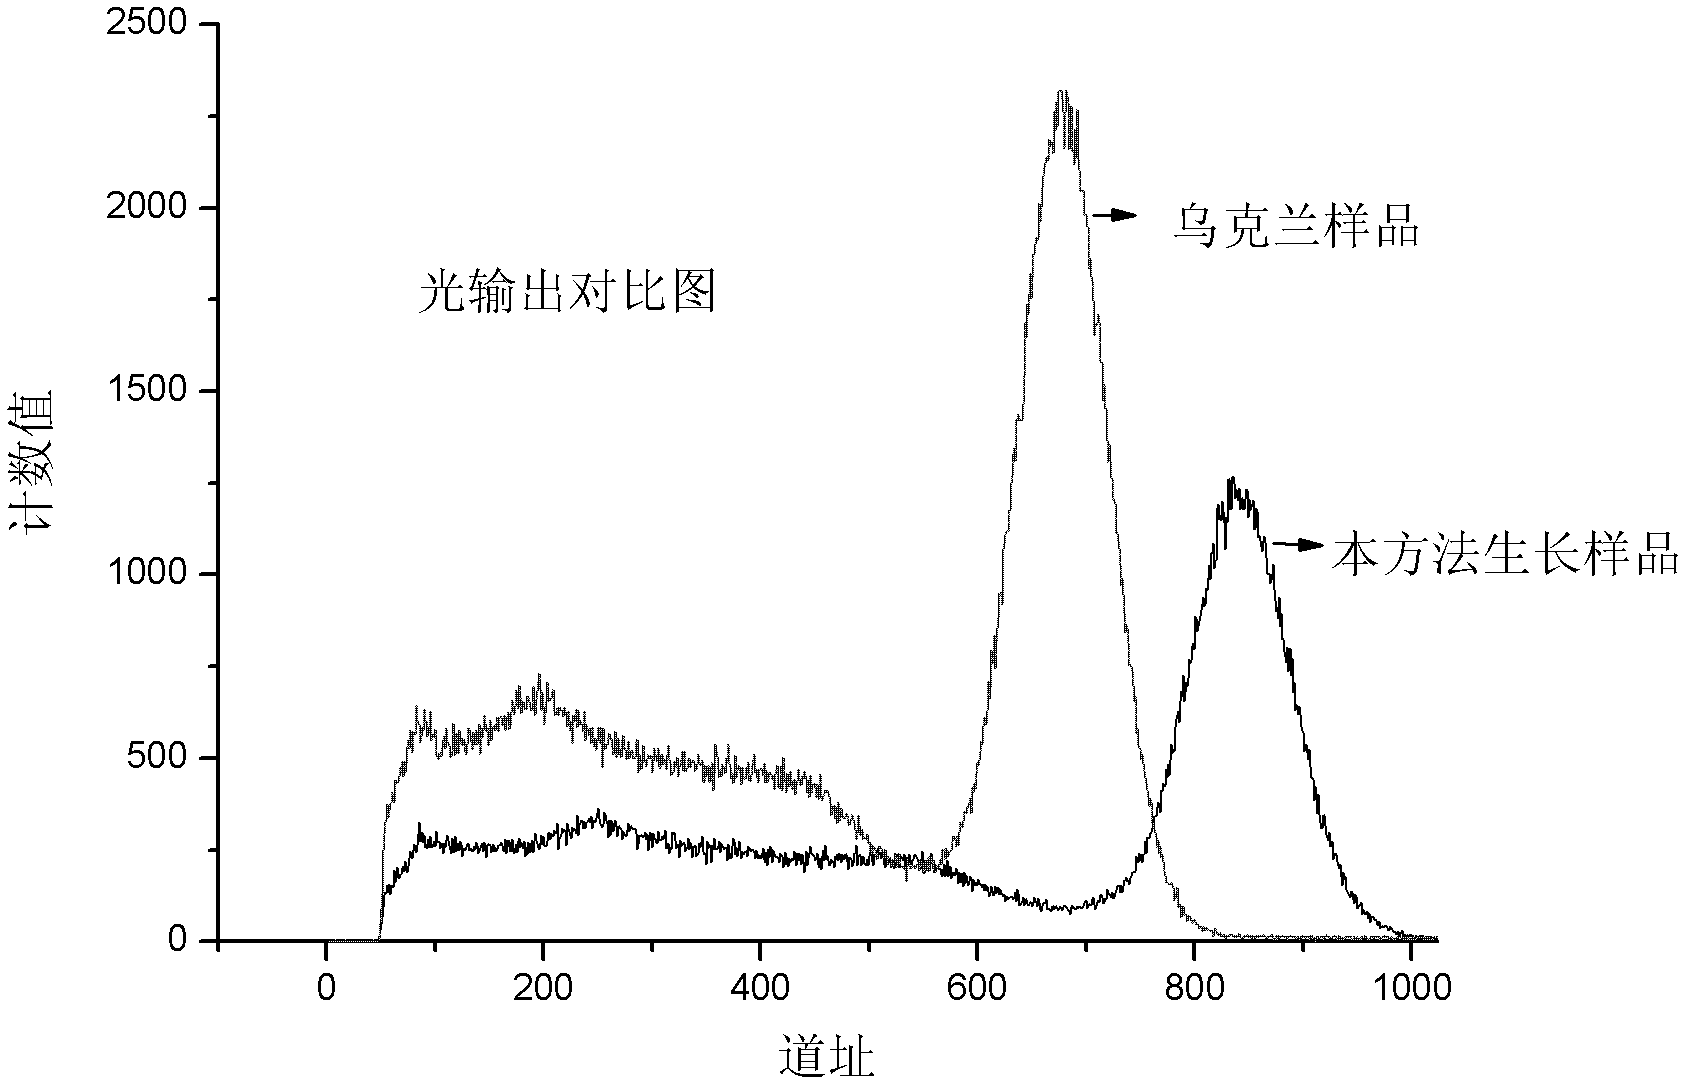 Bridgman method growth process of cesium iodide and thallium-doped cesium iodide monocrystalline